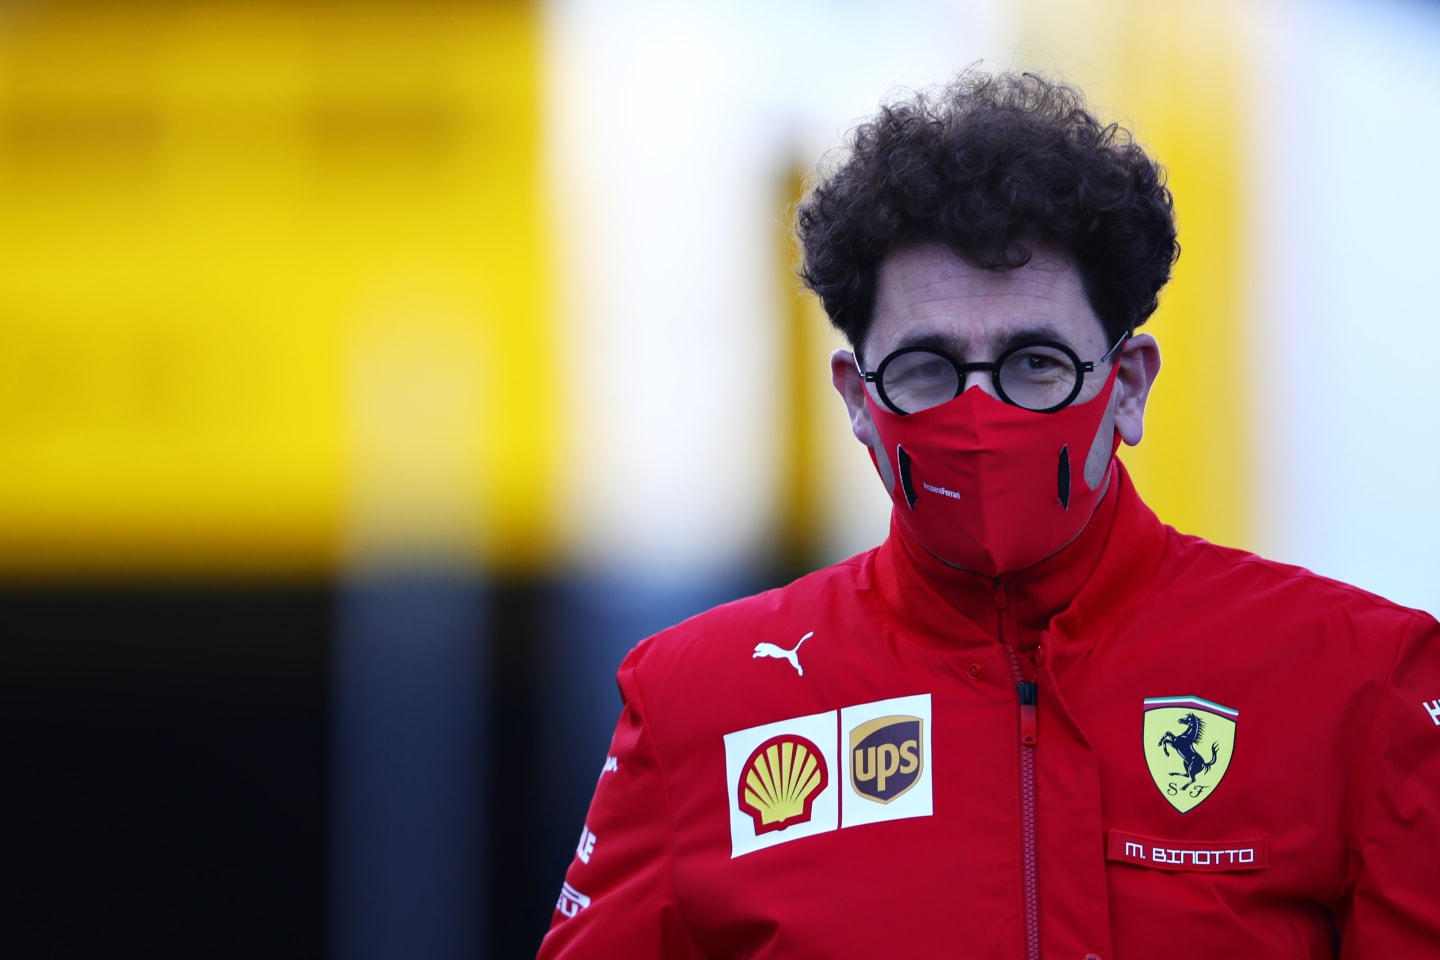 NUERBURG, GERMANY - OCTOBER 10: Scuderia Ferrari Team Principal Mattia Binotto walks in the Paddock